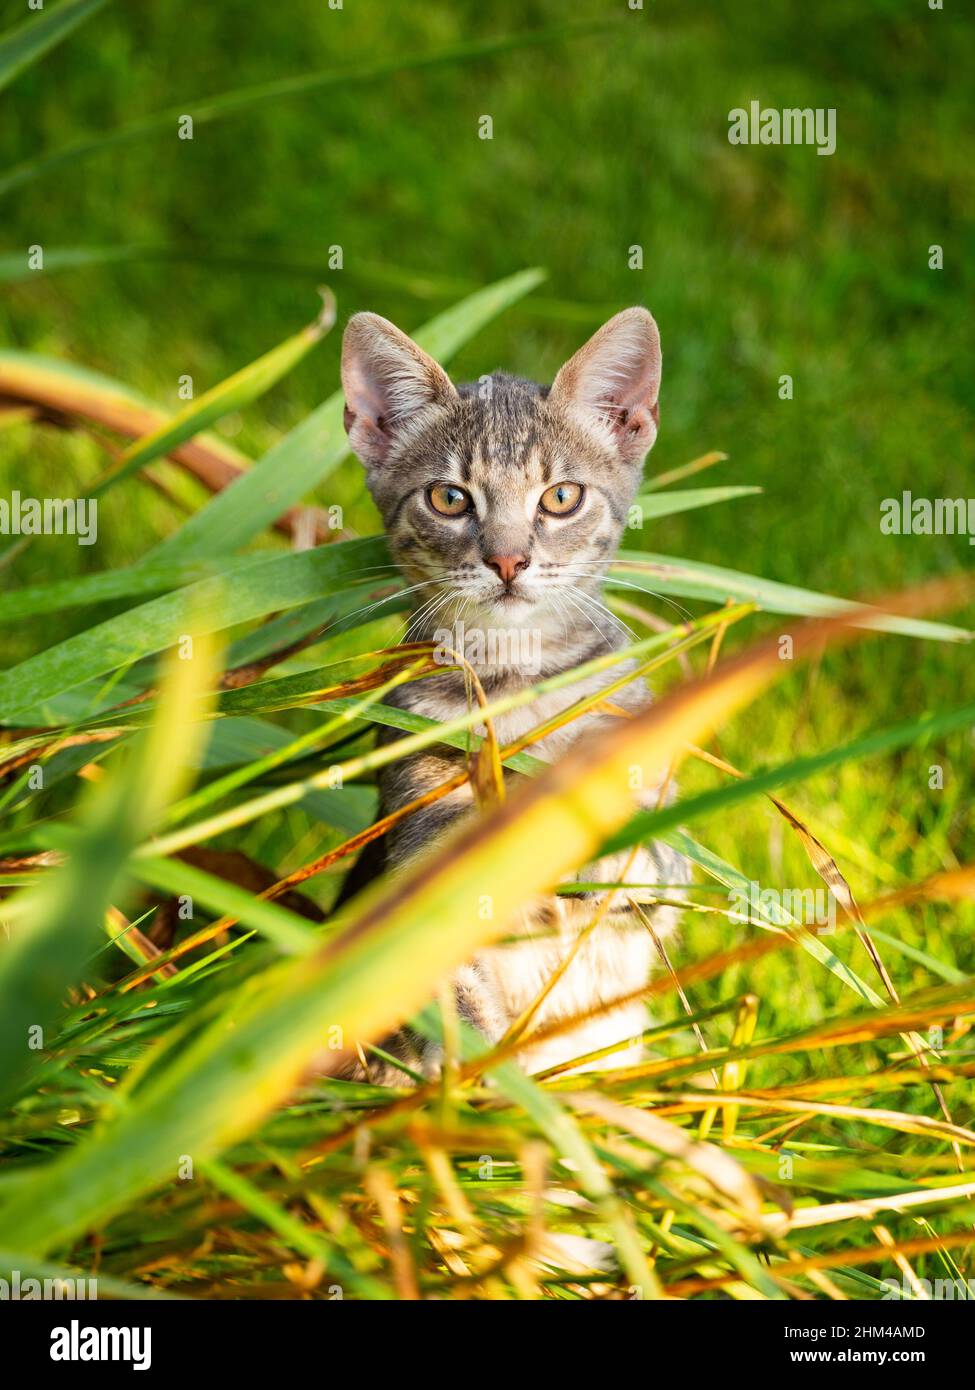 Cute kitten in a garden among flowers. Young kitten portrait outdoor Stock Photo